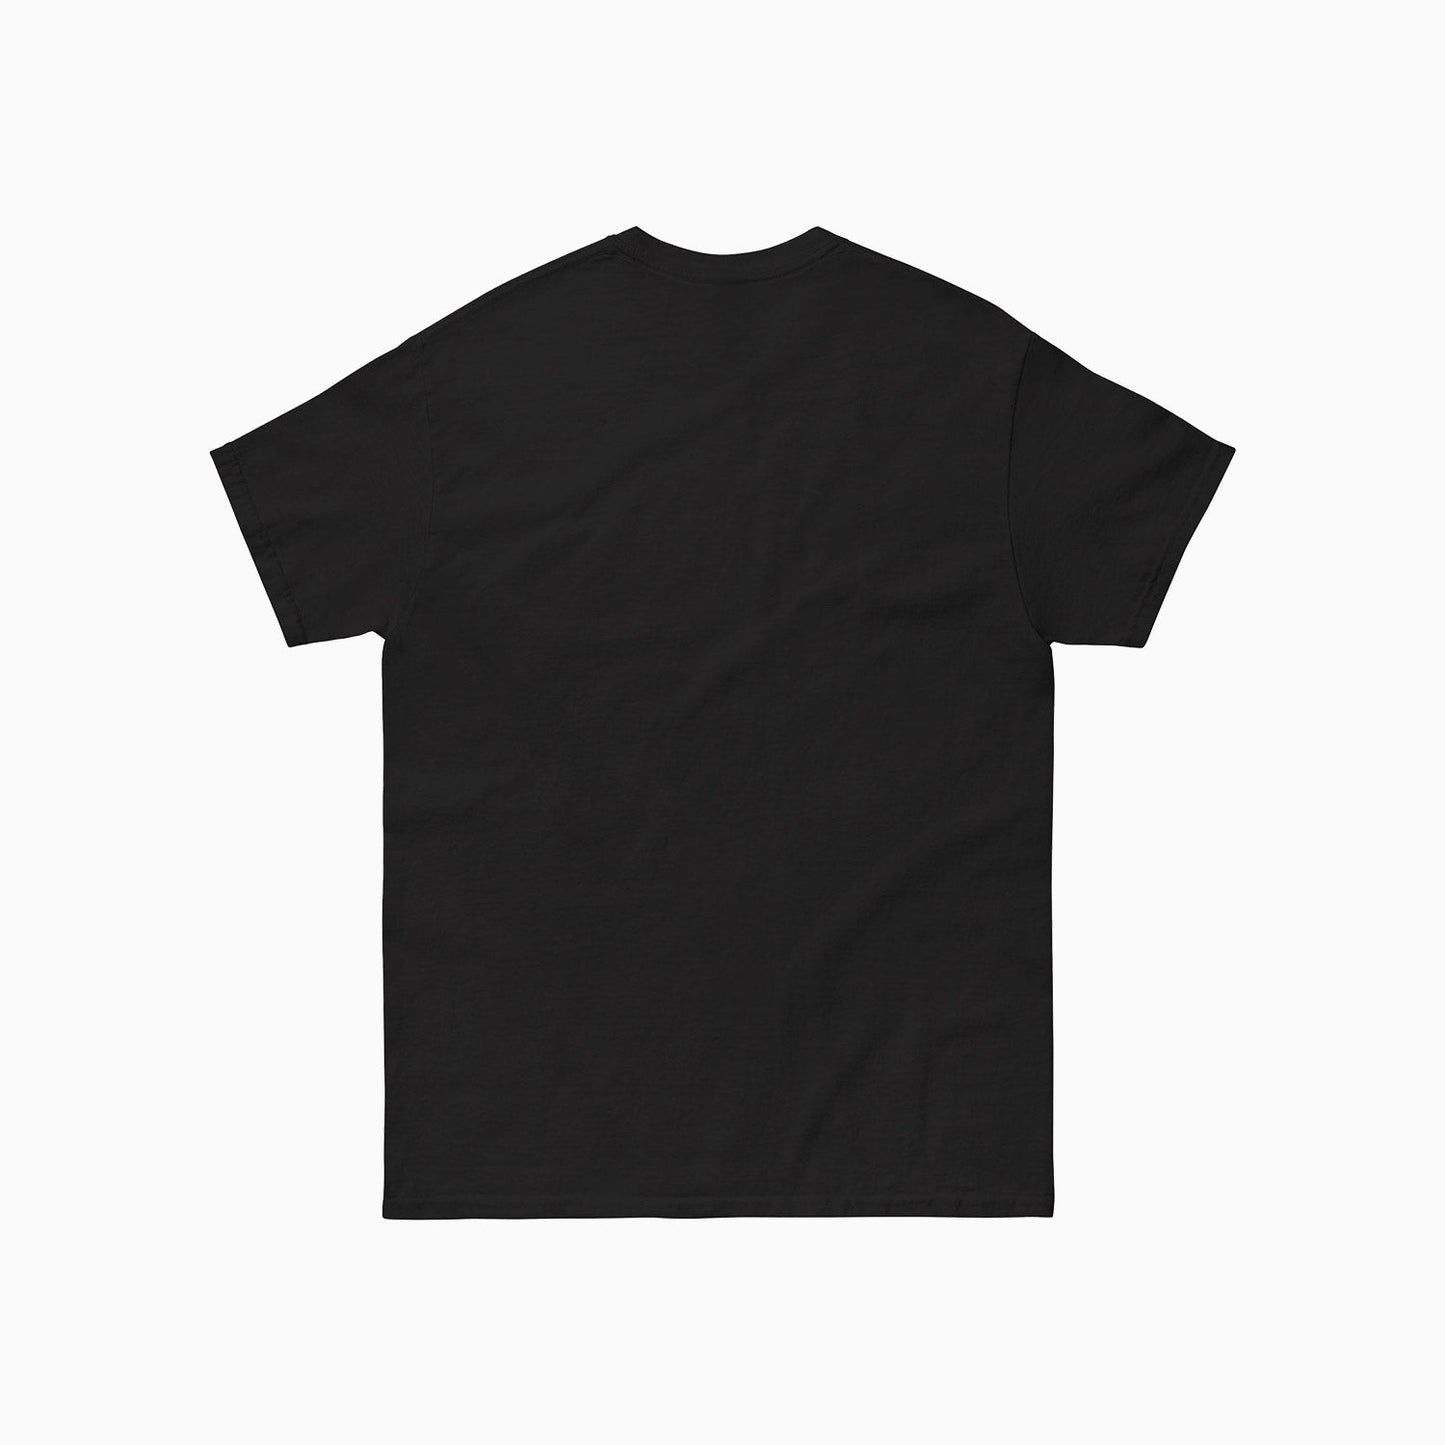 Men's Cut-Off Printed Black T Shirt